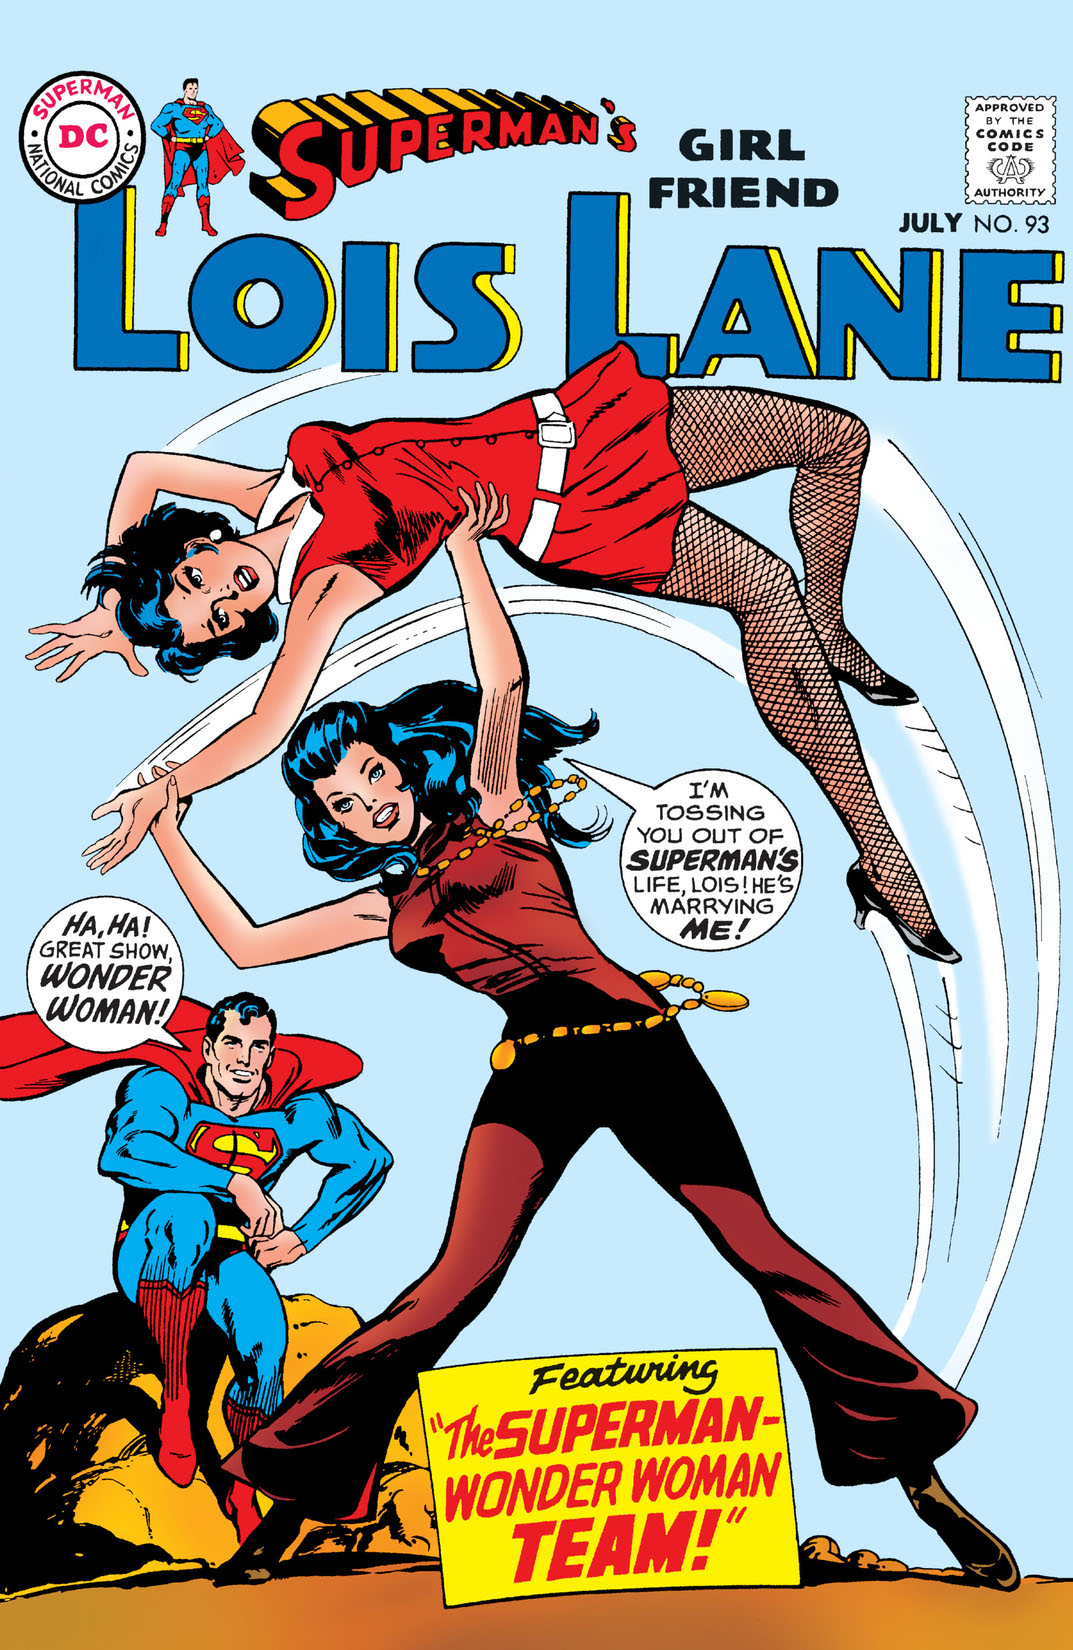 Superman's Girl Friend Lois Lane #93 preview images